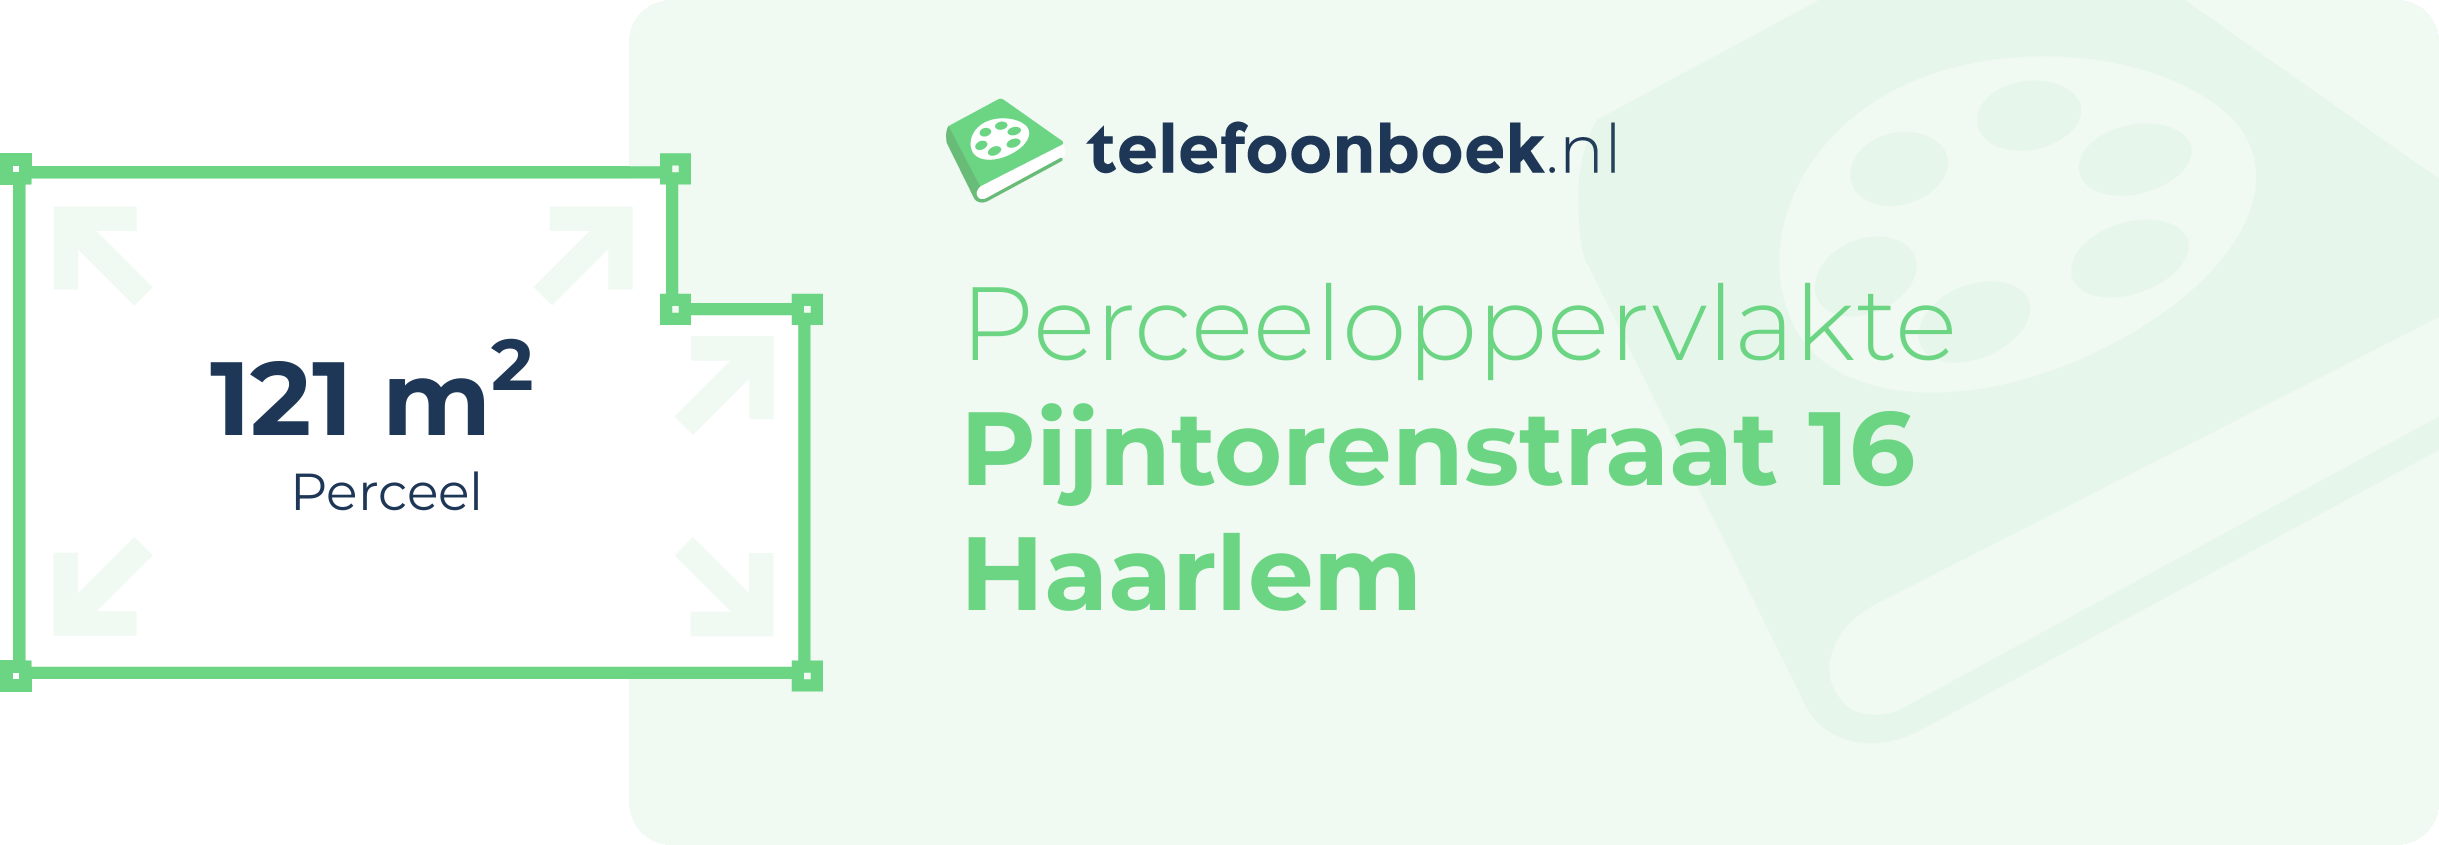 Perceeloppervlakte Pijntorenstraat 16 Haarlem